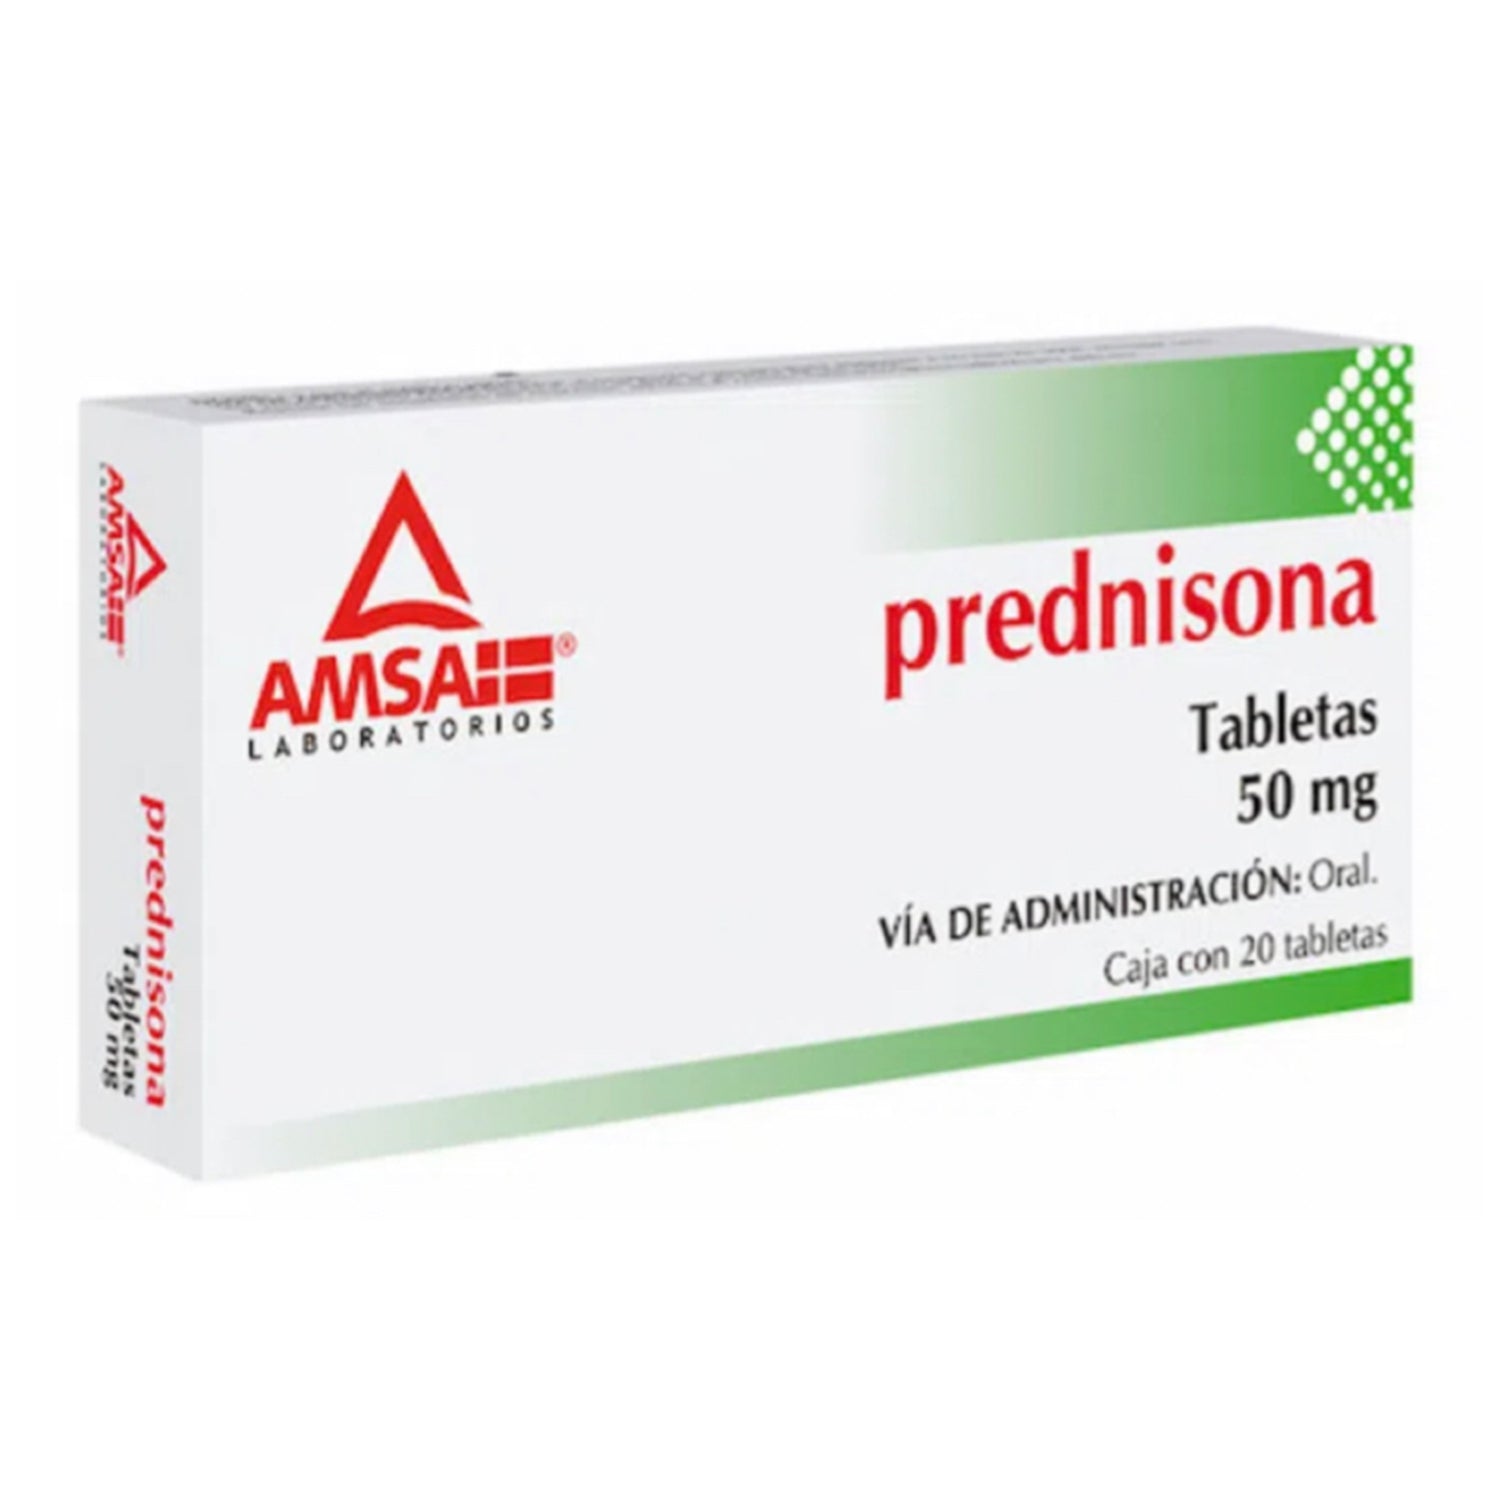 Prednisona 50 mg, caja con 20 tabletas. – Vitialife